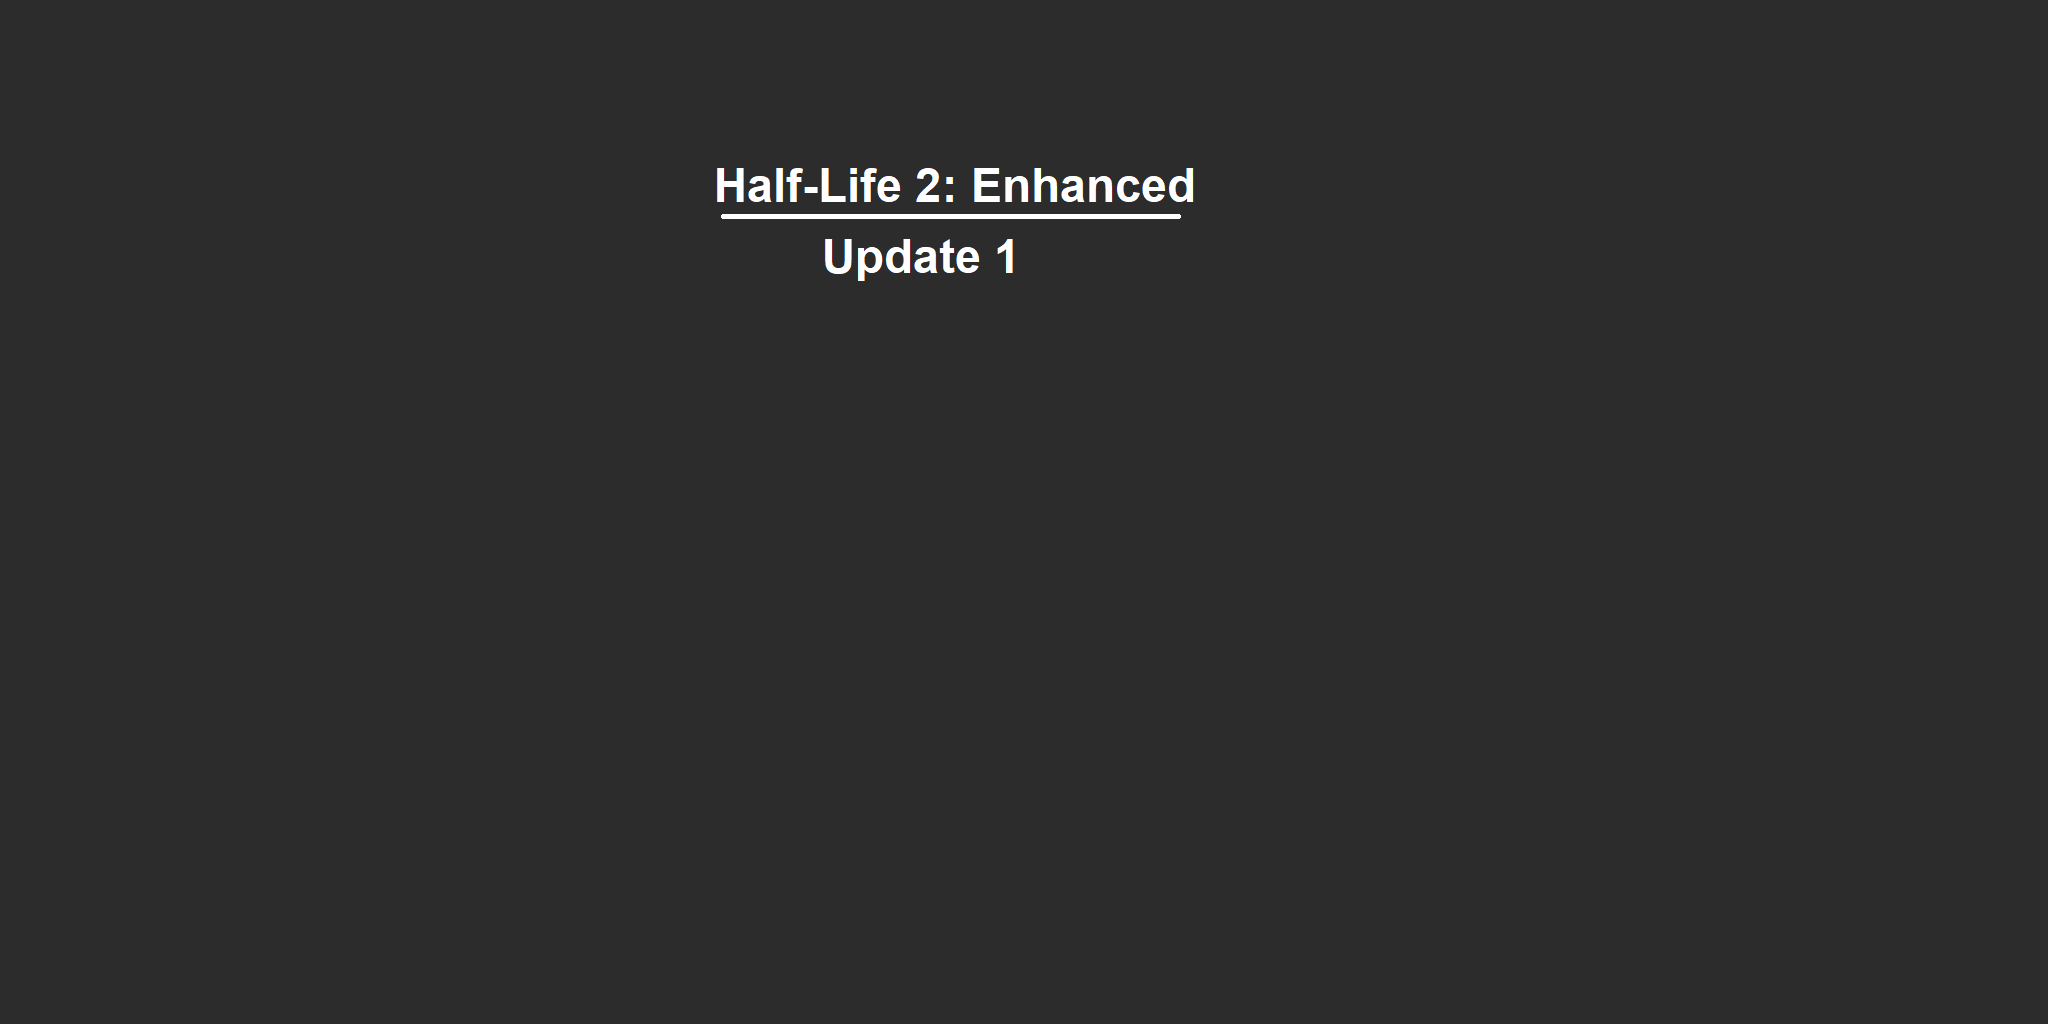 instal the last version for windows Half-Life